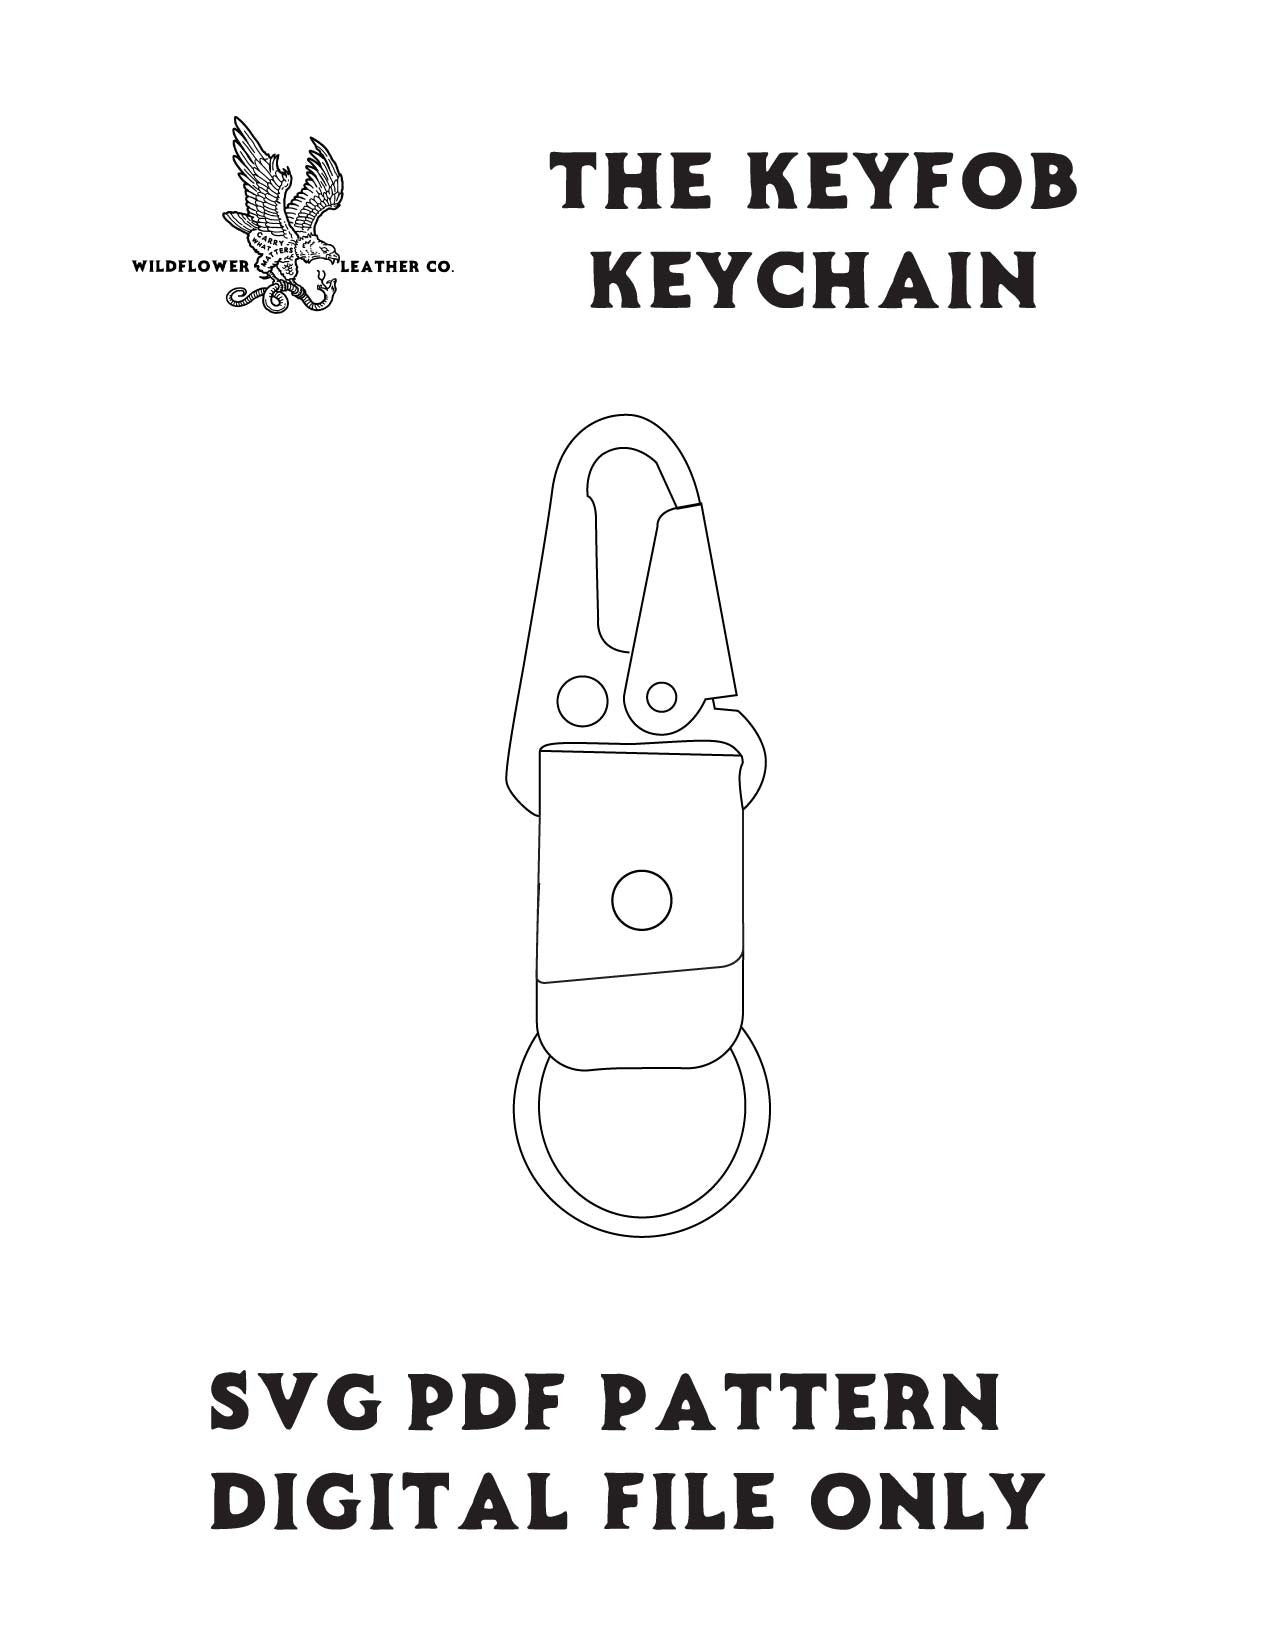 Making They Keyfob Keychain| PDF/SVG Template